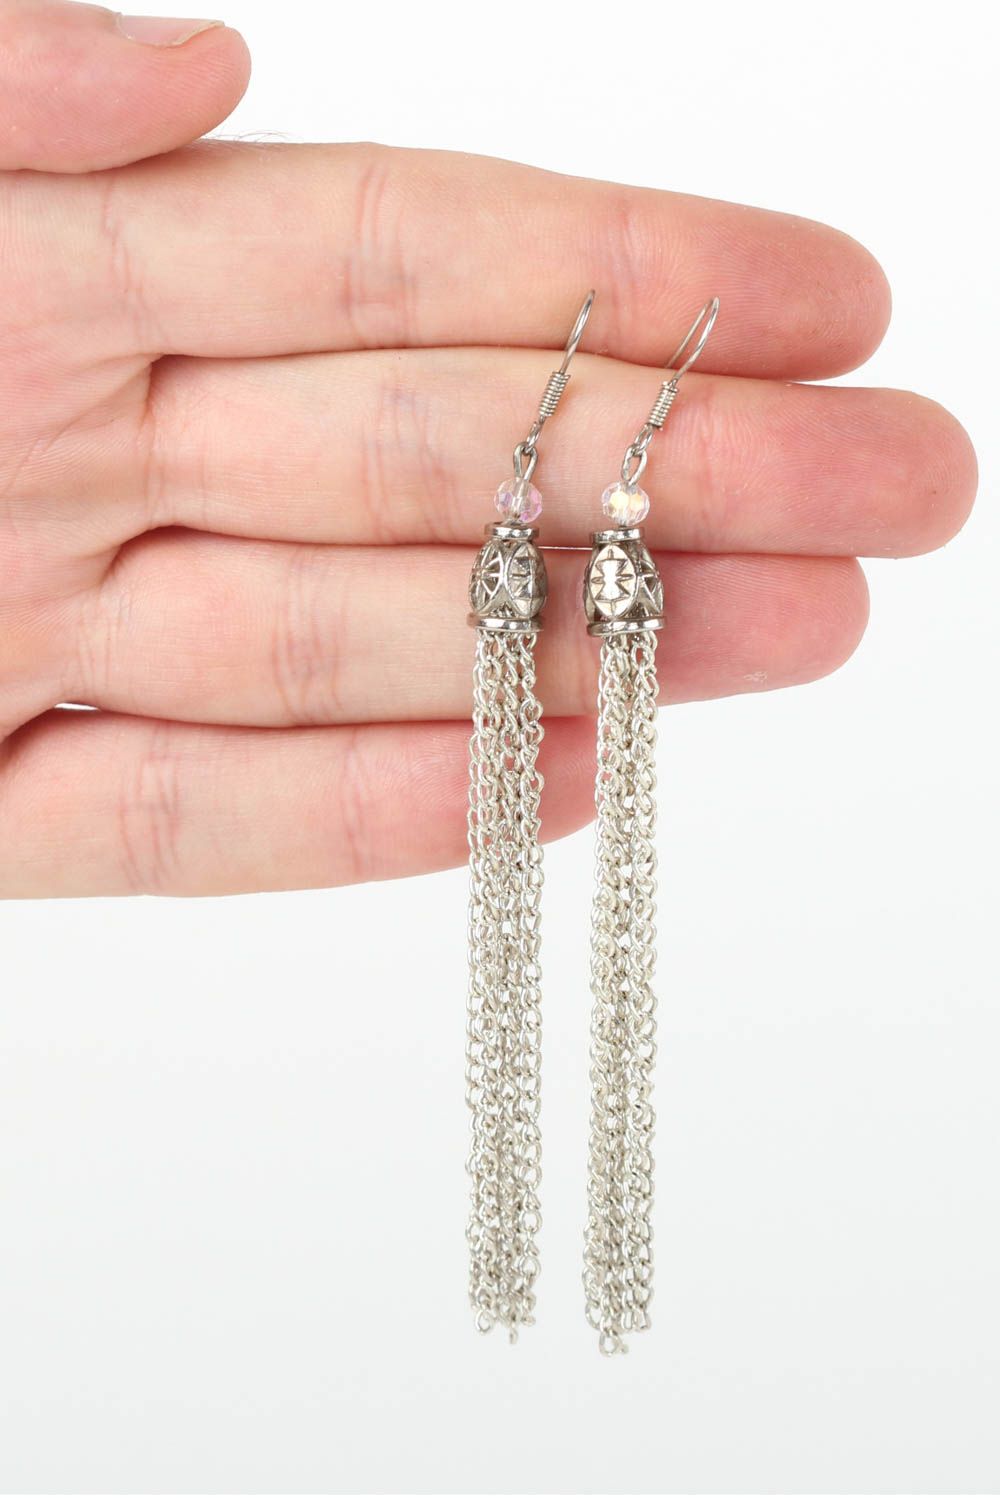 Handmade metal earrings long earrings with charms crystal earrings gift for girl photo 5